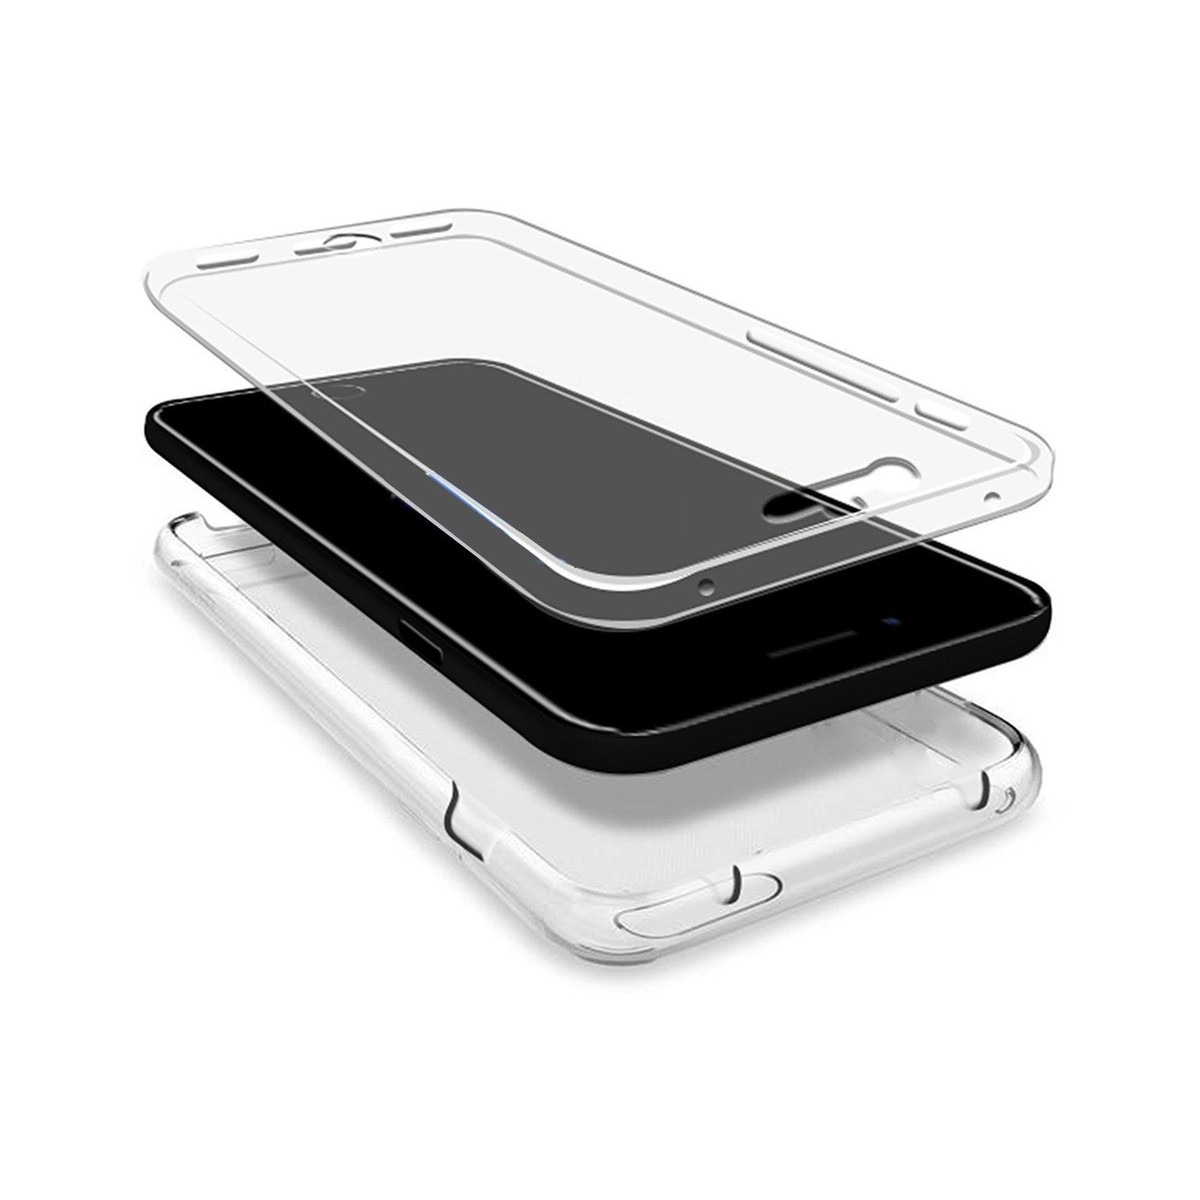 Funda Gel Tpu Completa Transparente Full Body 360º para Iphone 6 Plus / 6S Plus